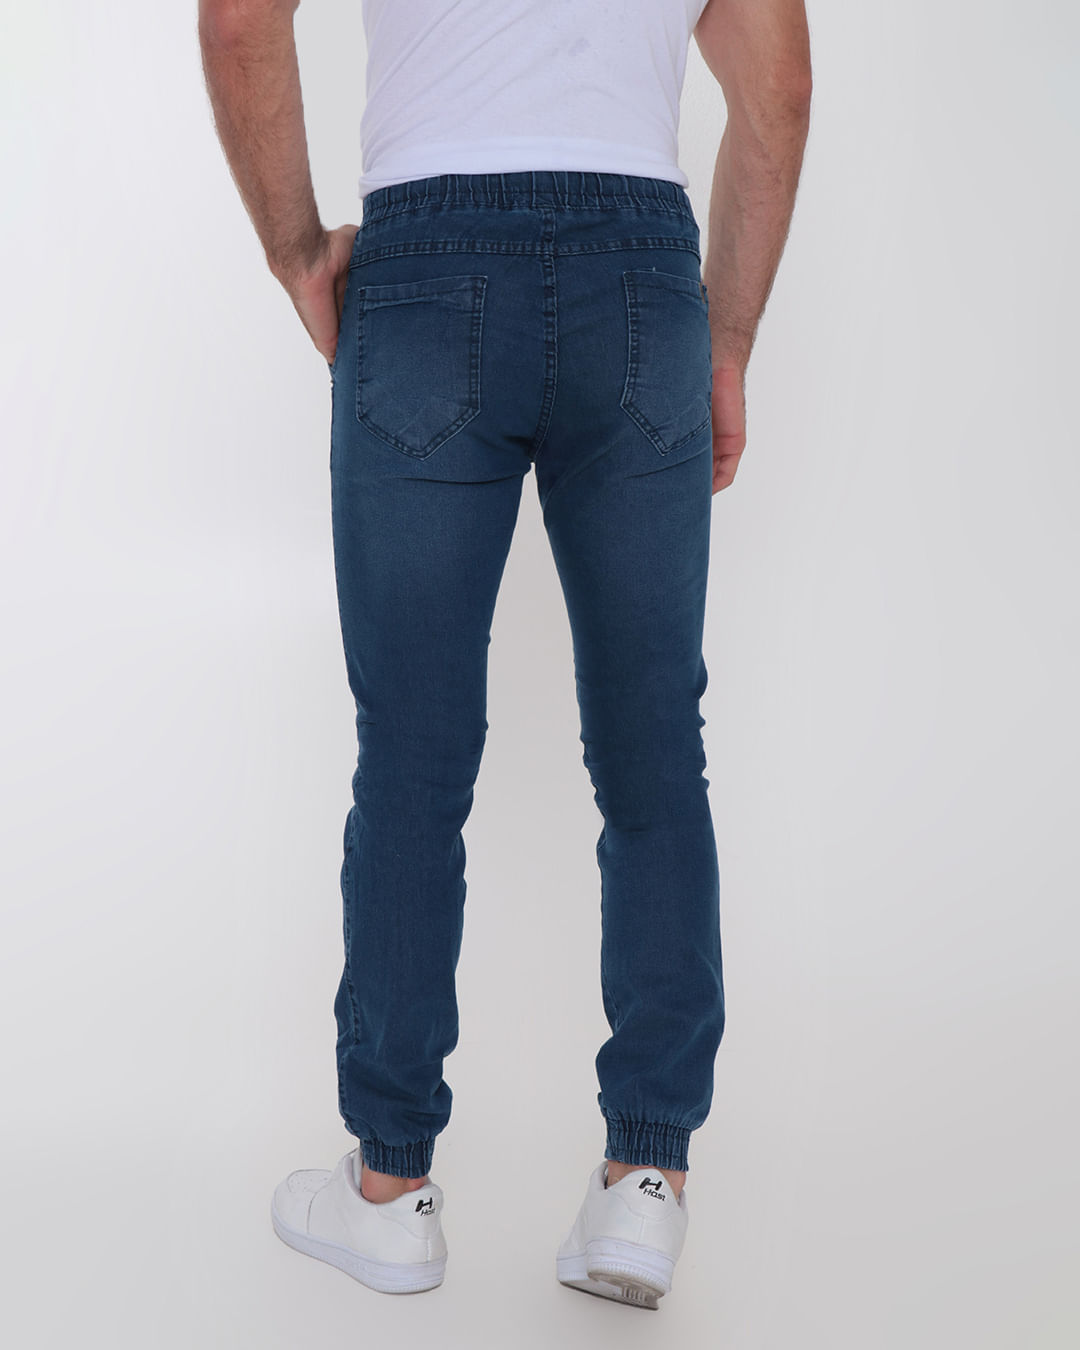 Jogger jeans